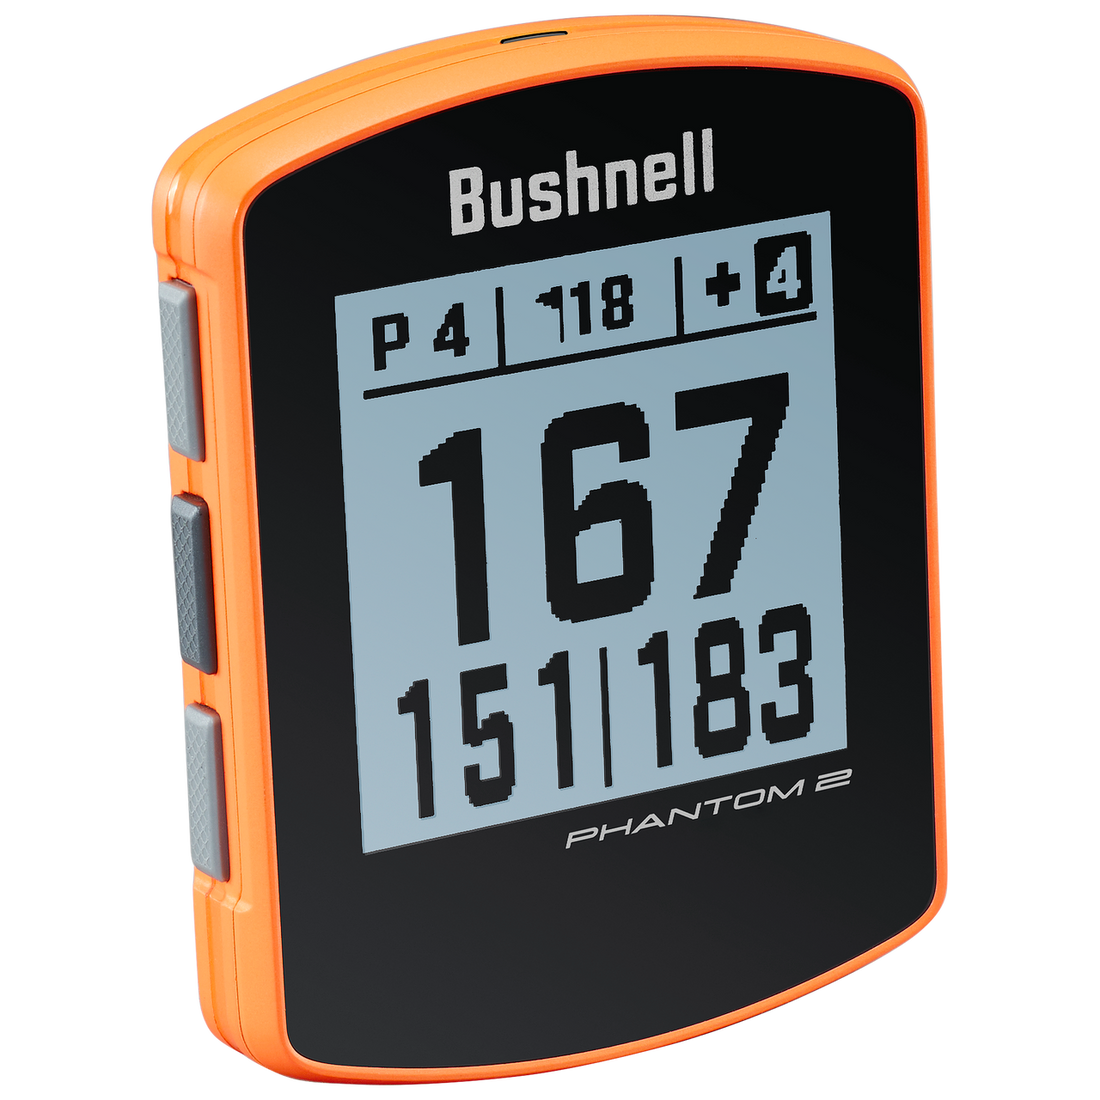 Bushnell Phantom 2 Handheld GPS